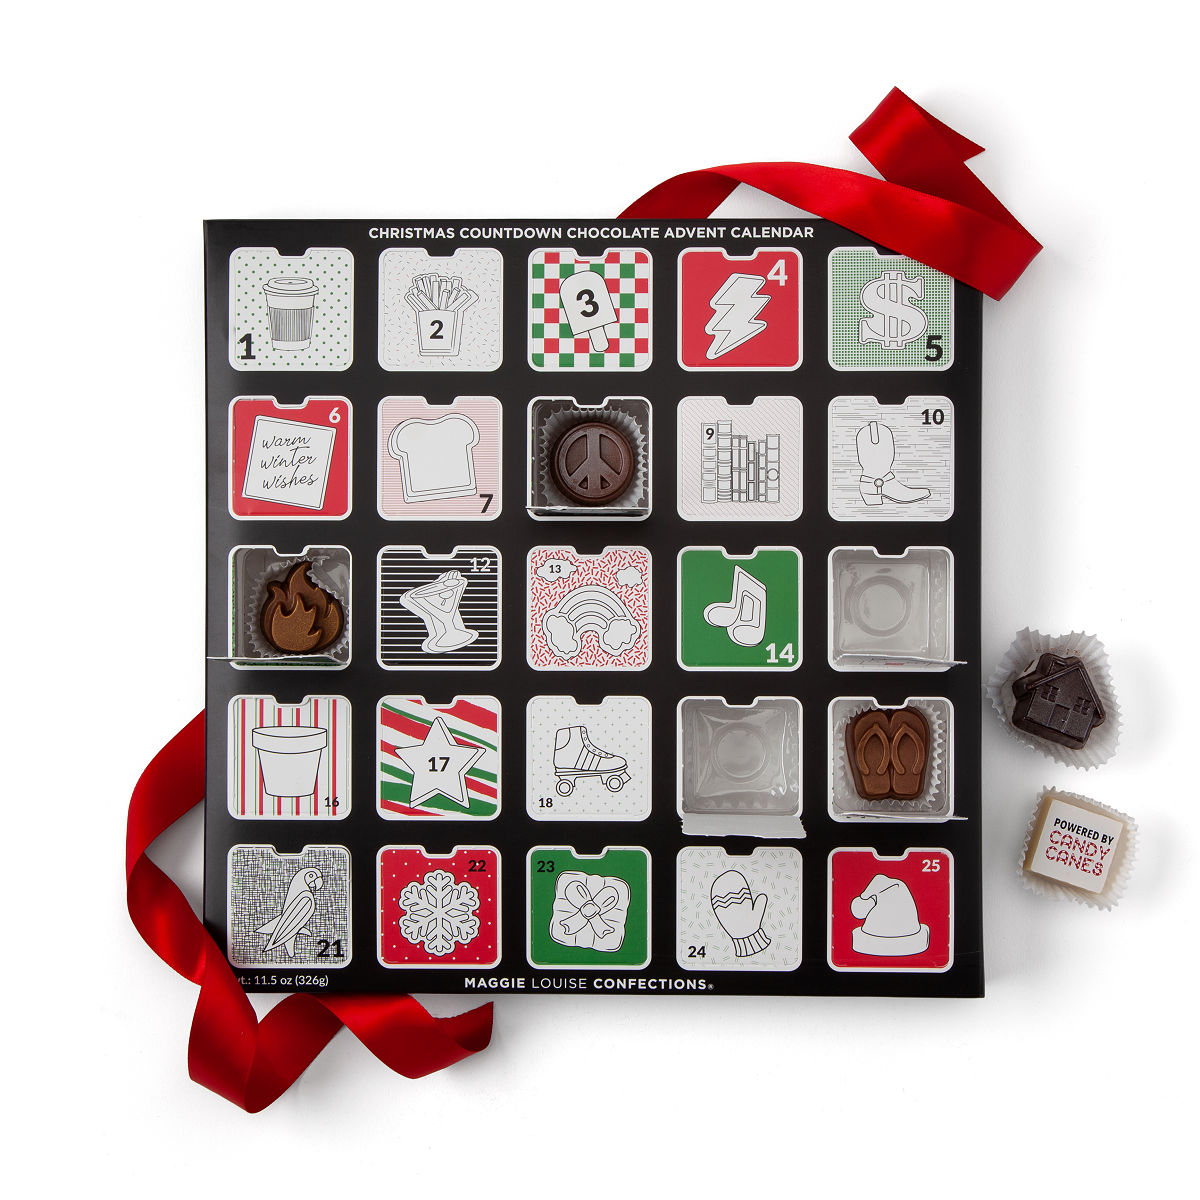 Edible Artwork Chocolate Advent Calendar Holiday Gifts Christmas